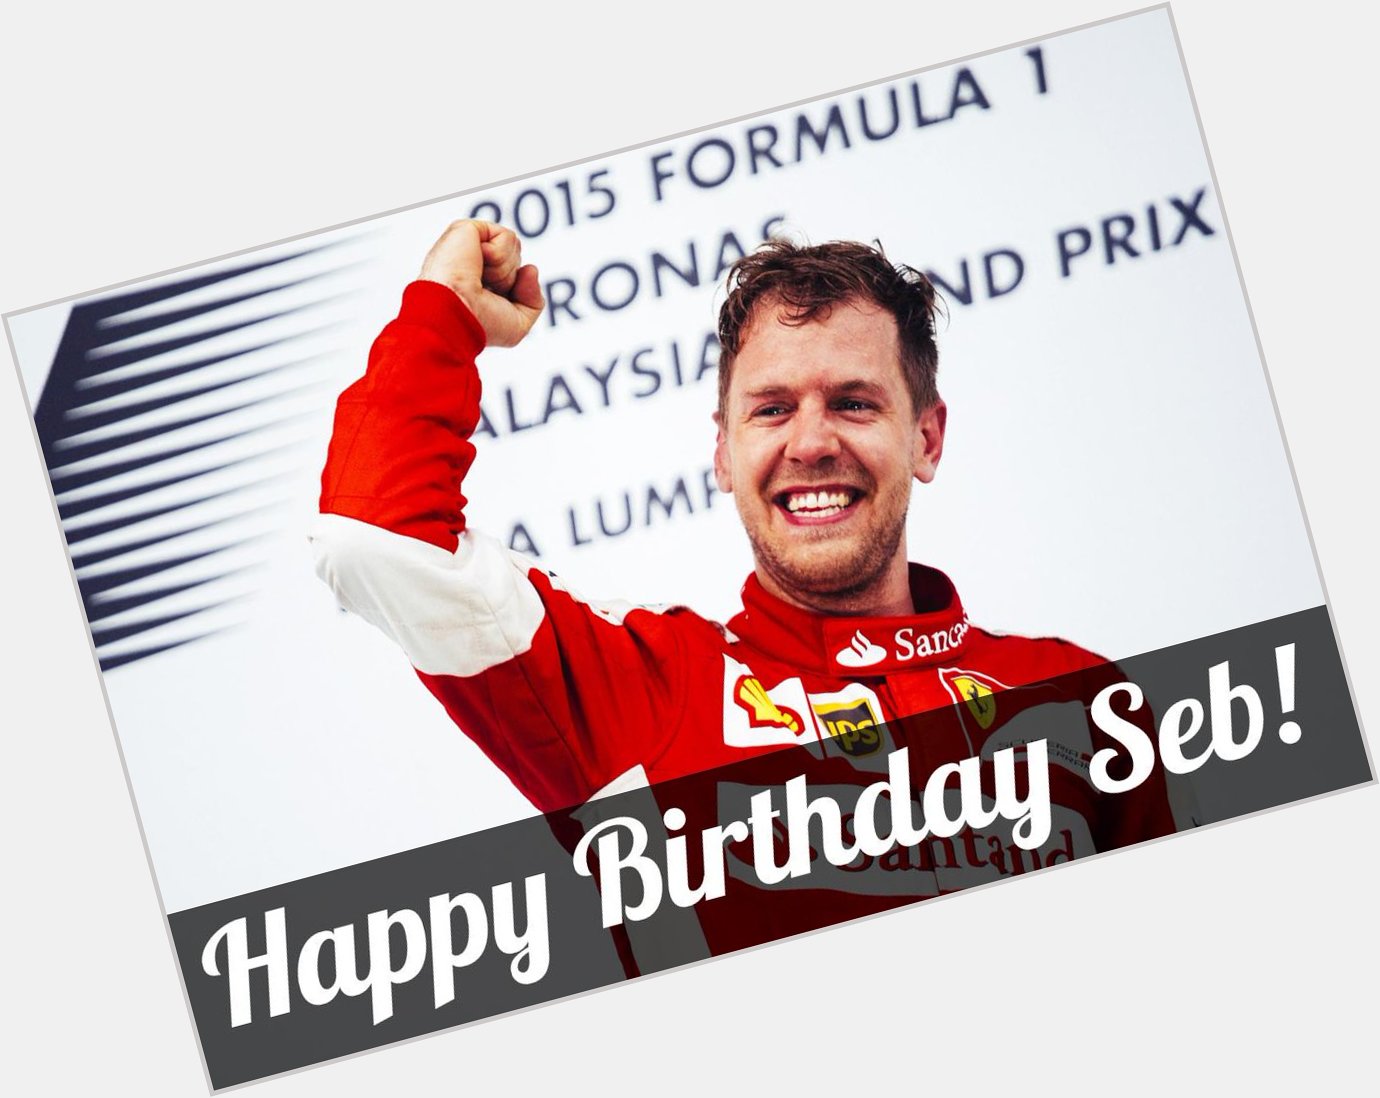 A Happy Birthday to Sebastian Vettel, who turns 28 today.  